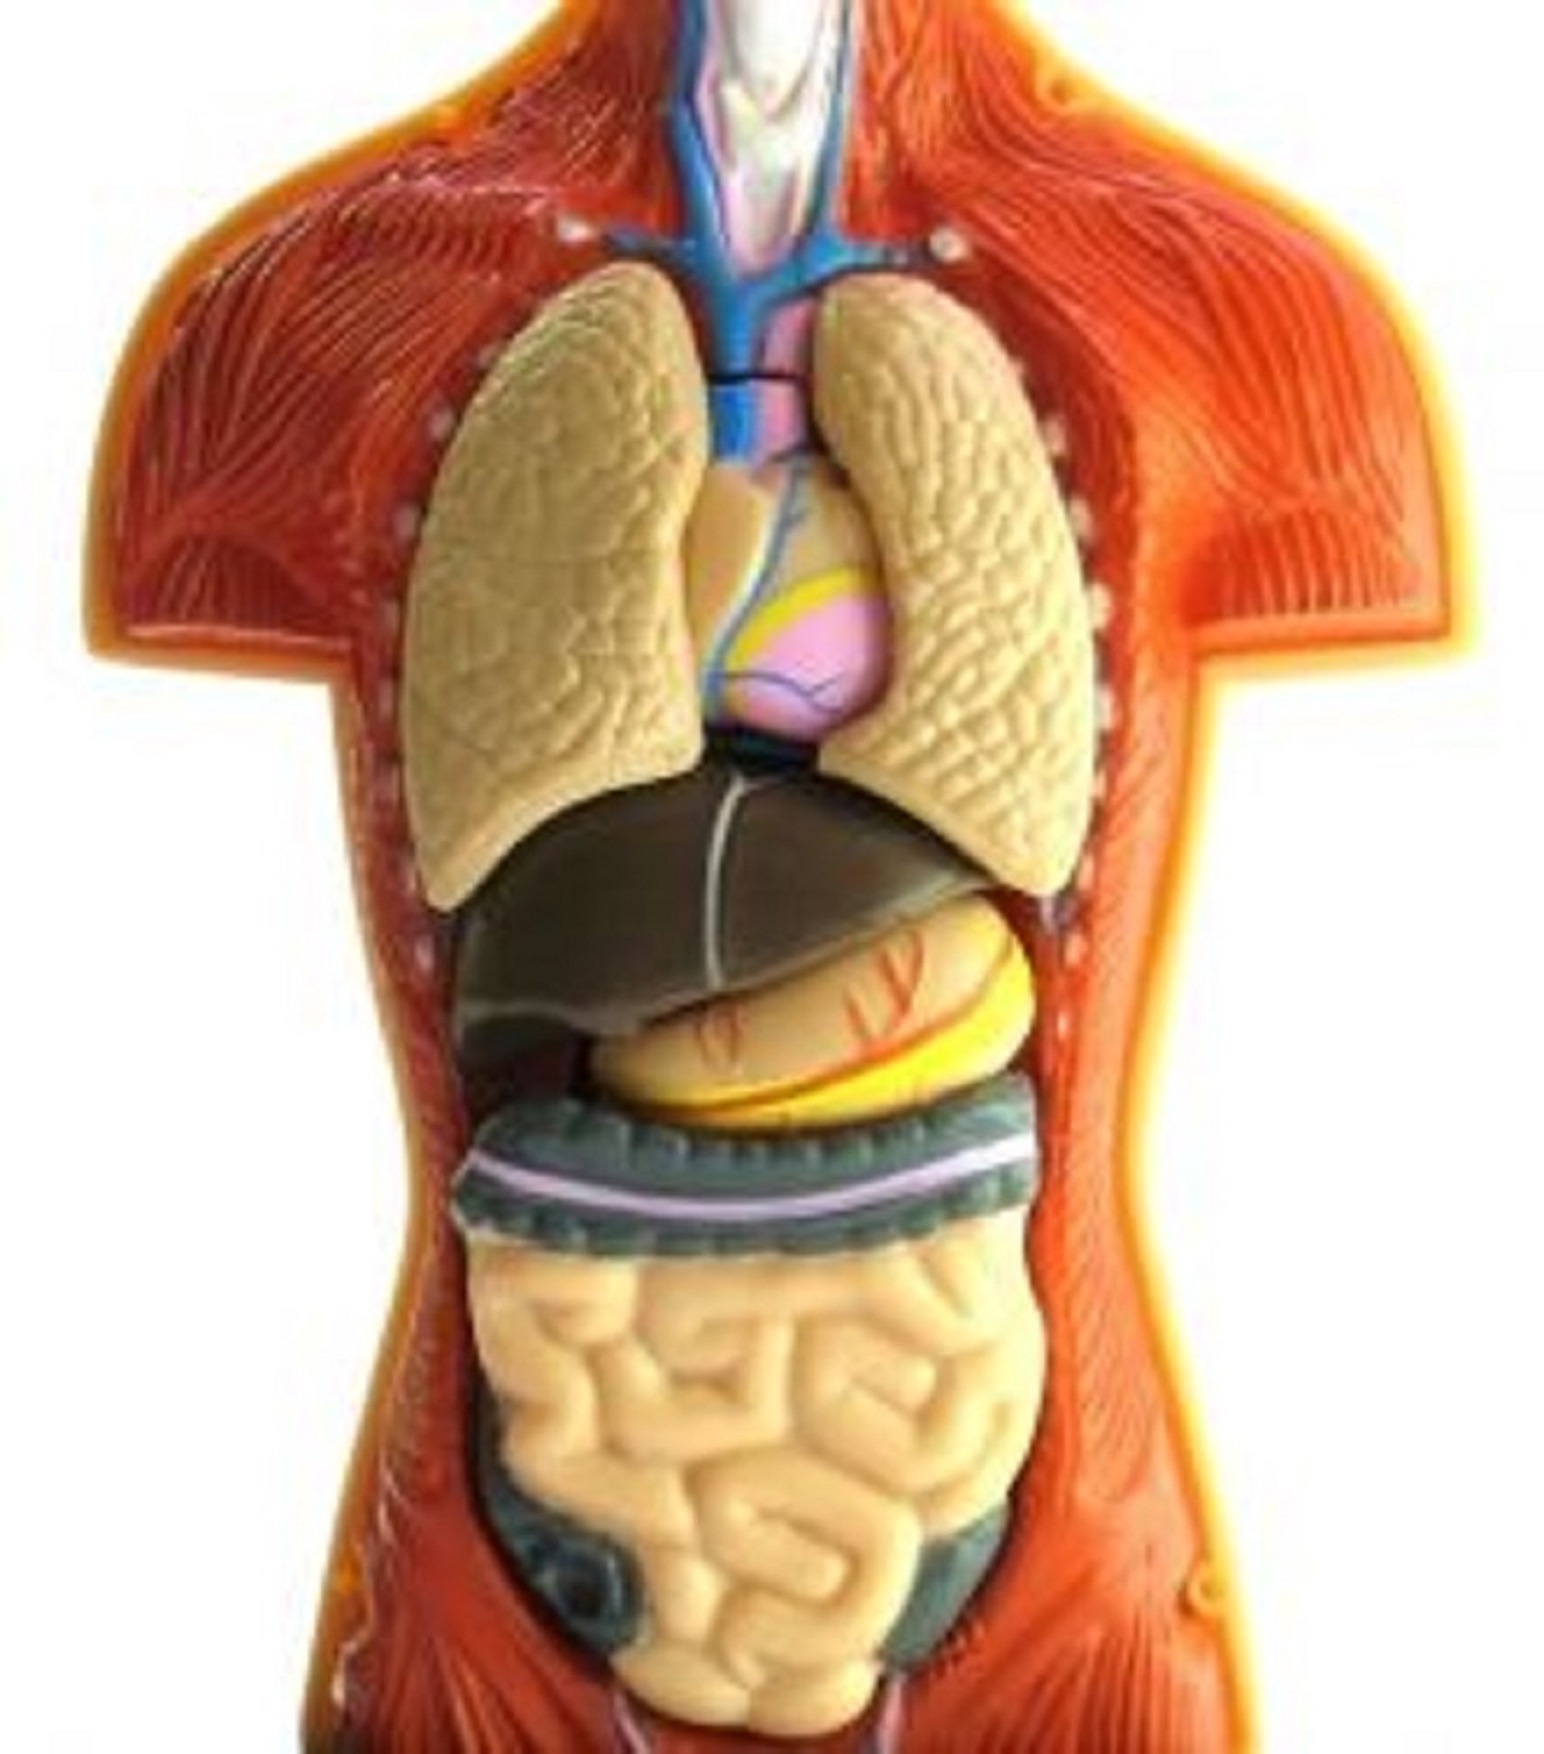 gut intestine anatomy